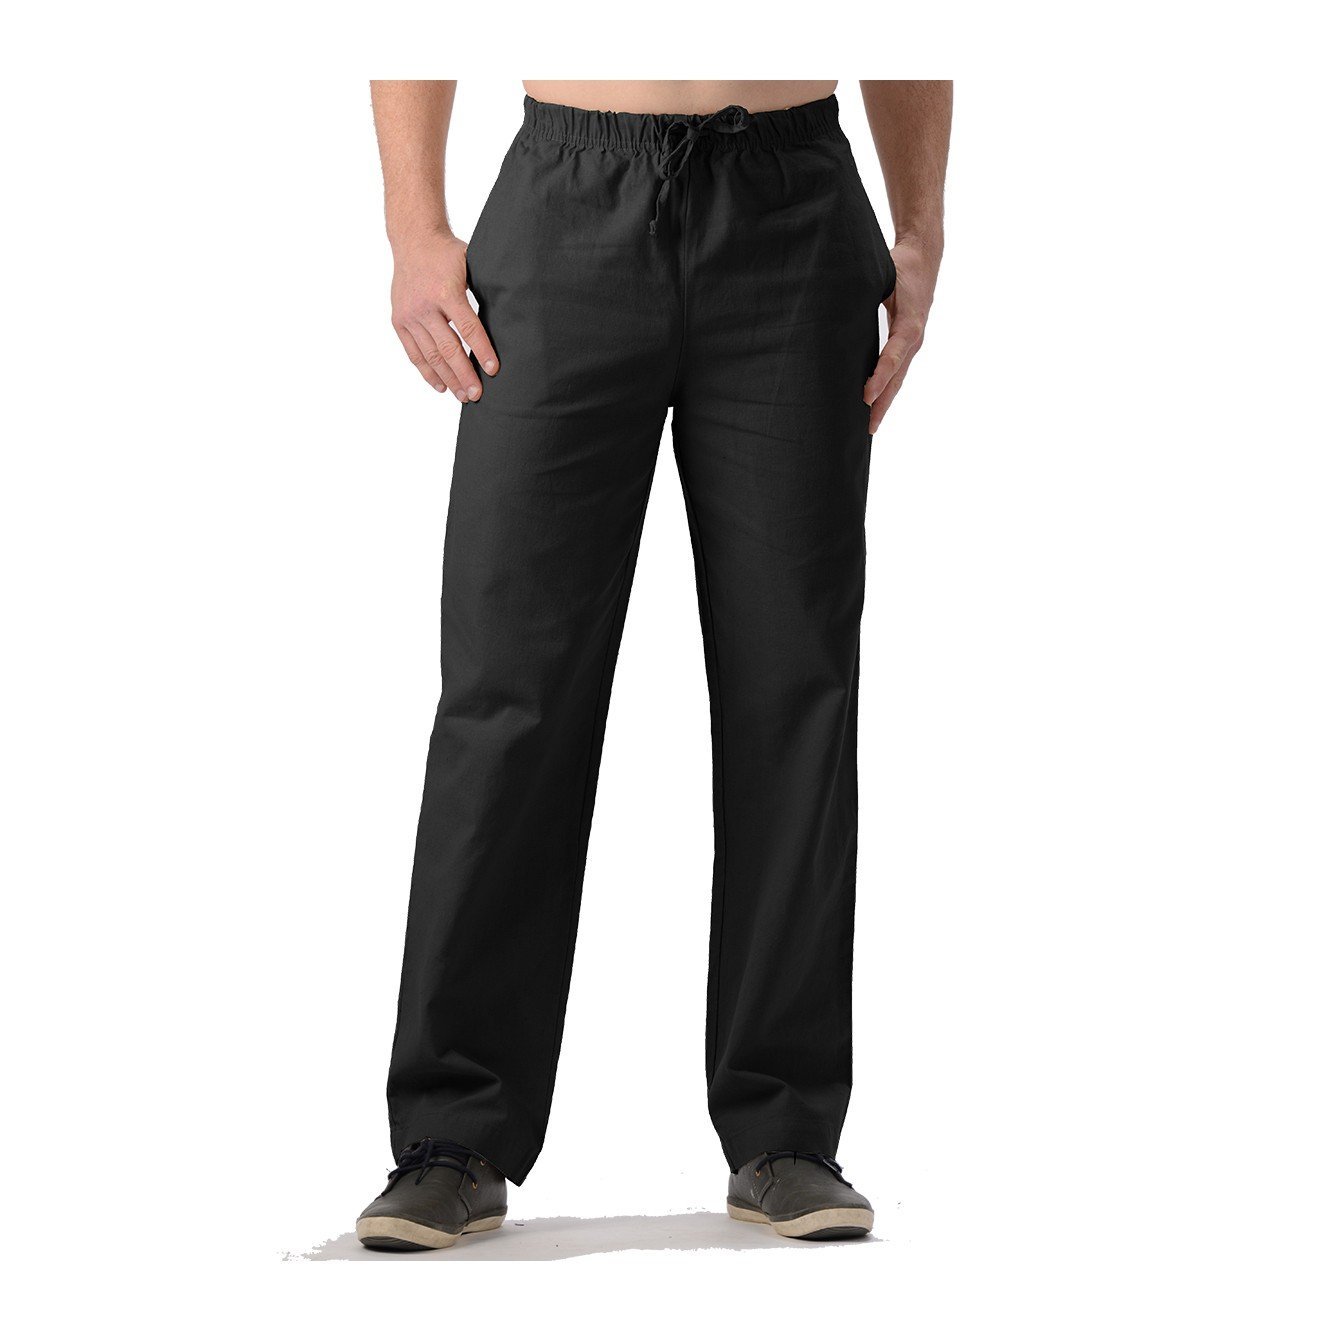 Men's Hemp/Organic Cotton Sweat Pants